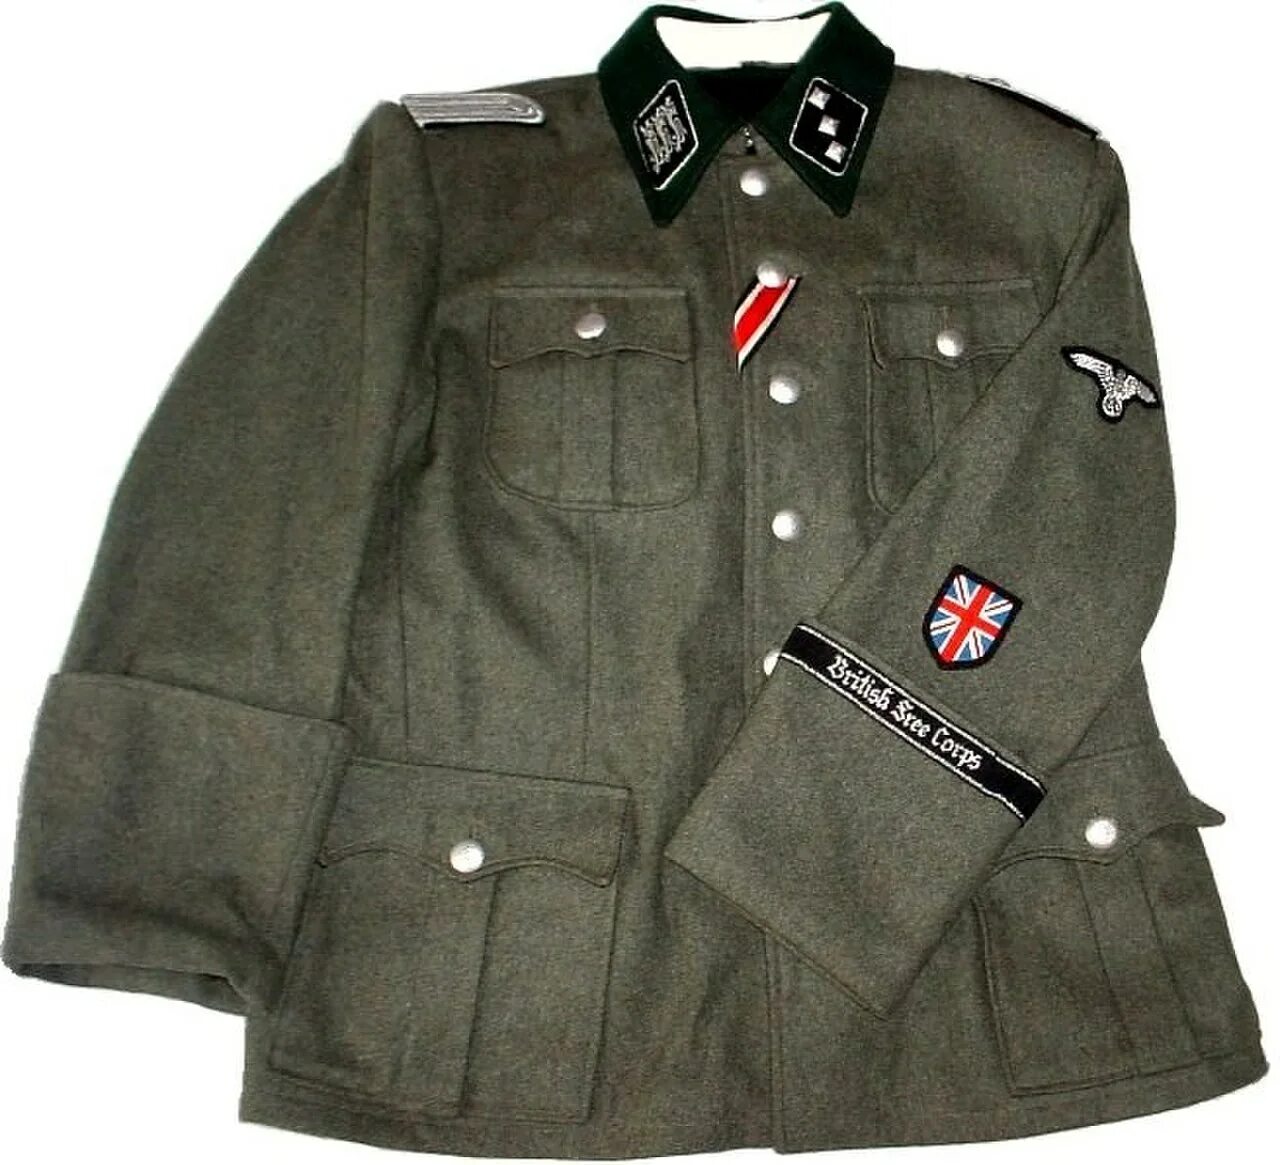 SD Waffen SS форма. Униформа СС m36. Британский добровольческий корпус Ваффен СС. Китель м36 Вермахт.